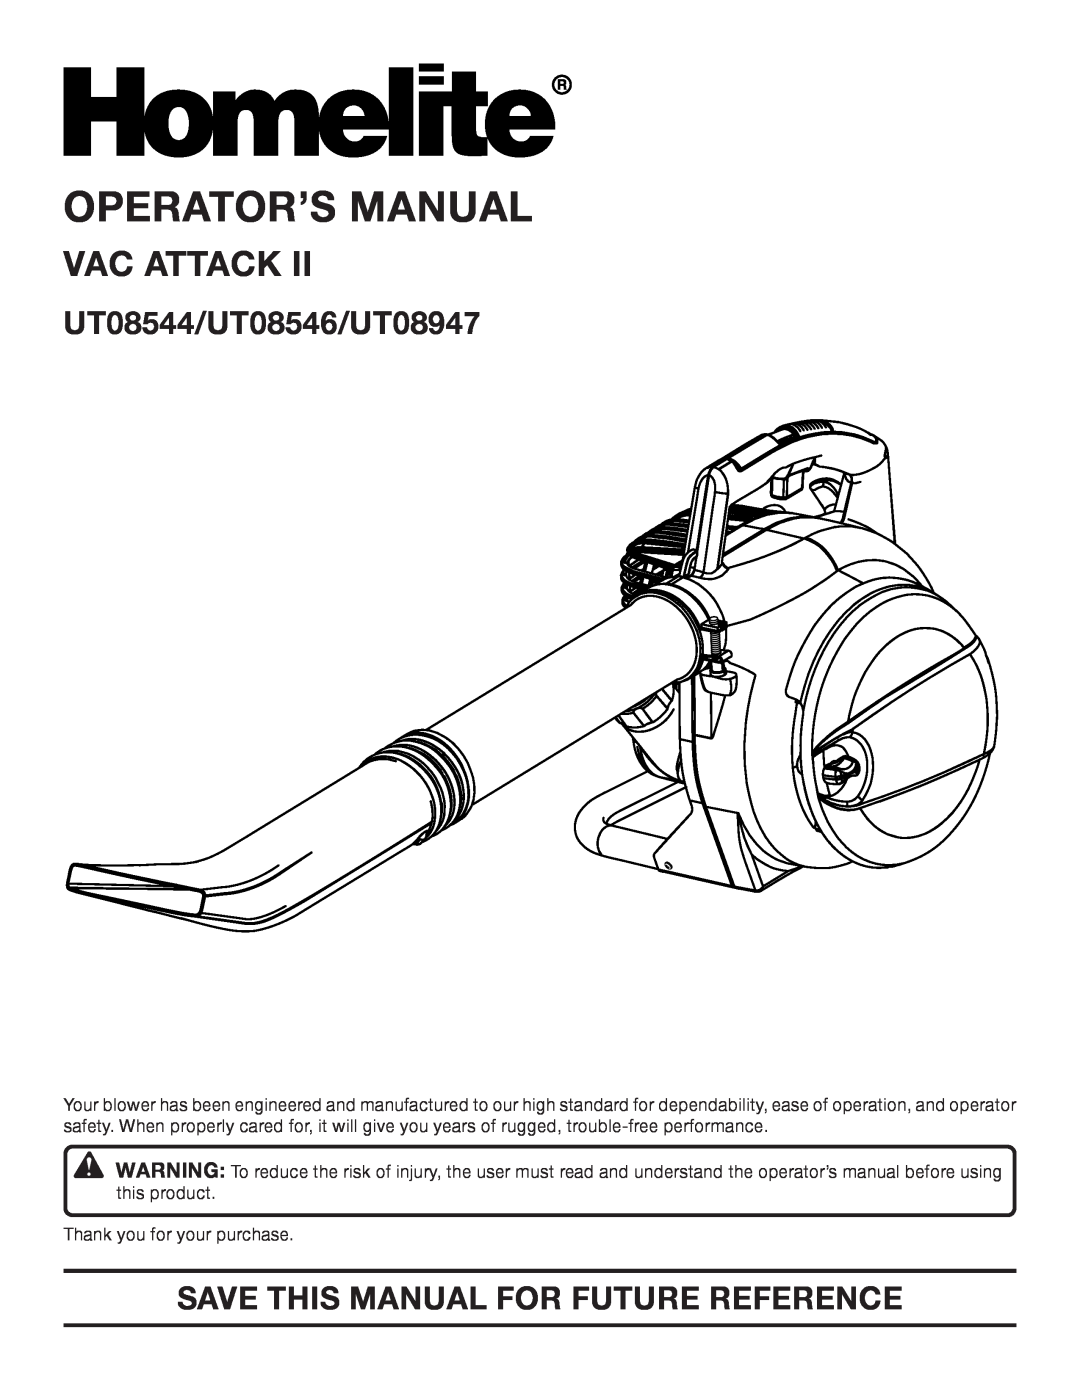 Homelite manual Operator’S Manual, Vac Attack, UT08544/UT08546/UT08947, Save This Manual For Future Reference 